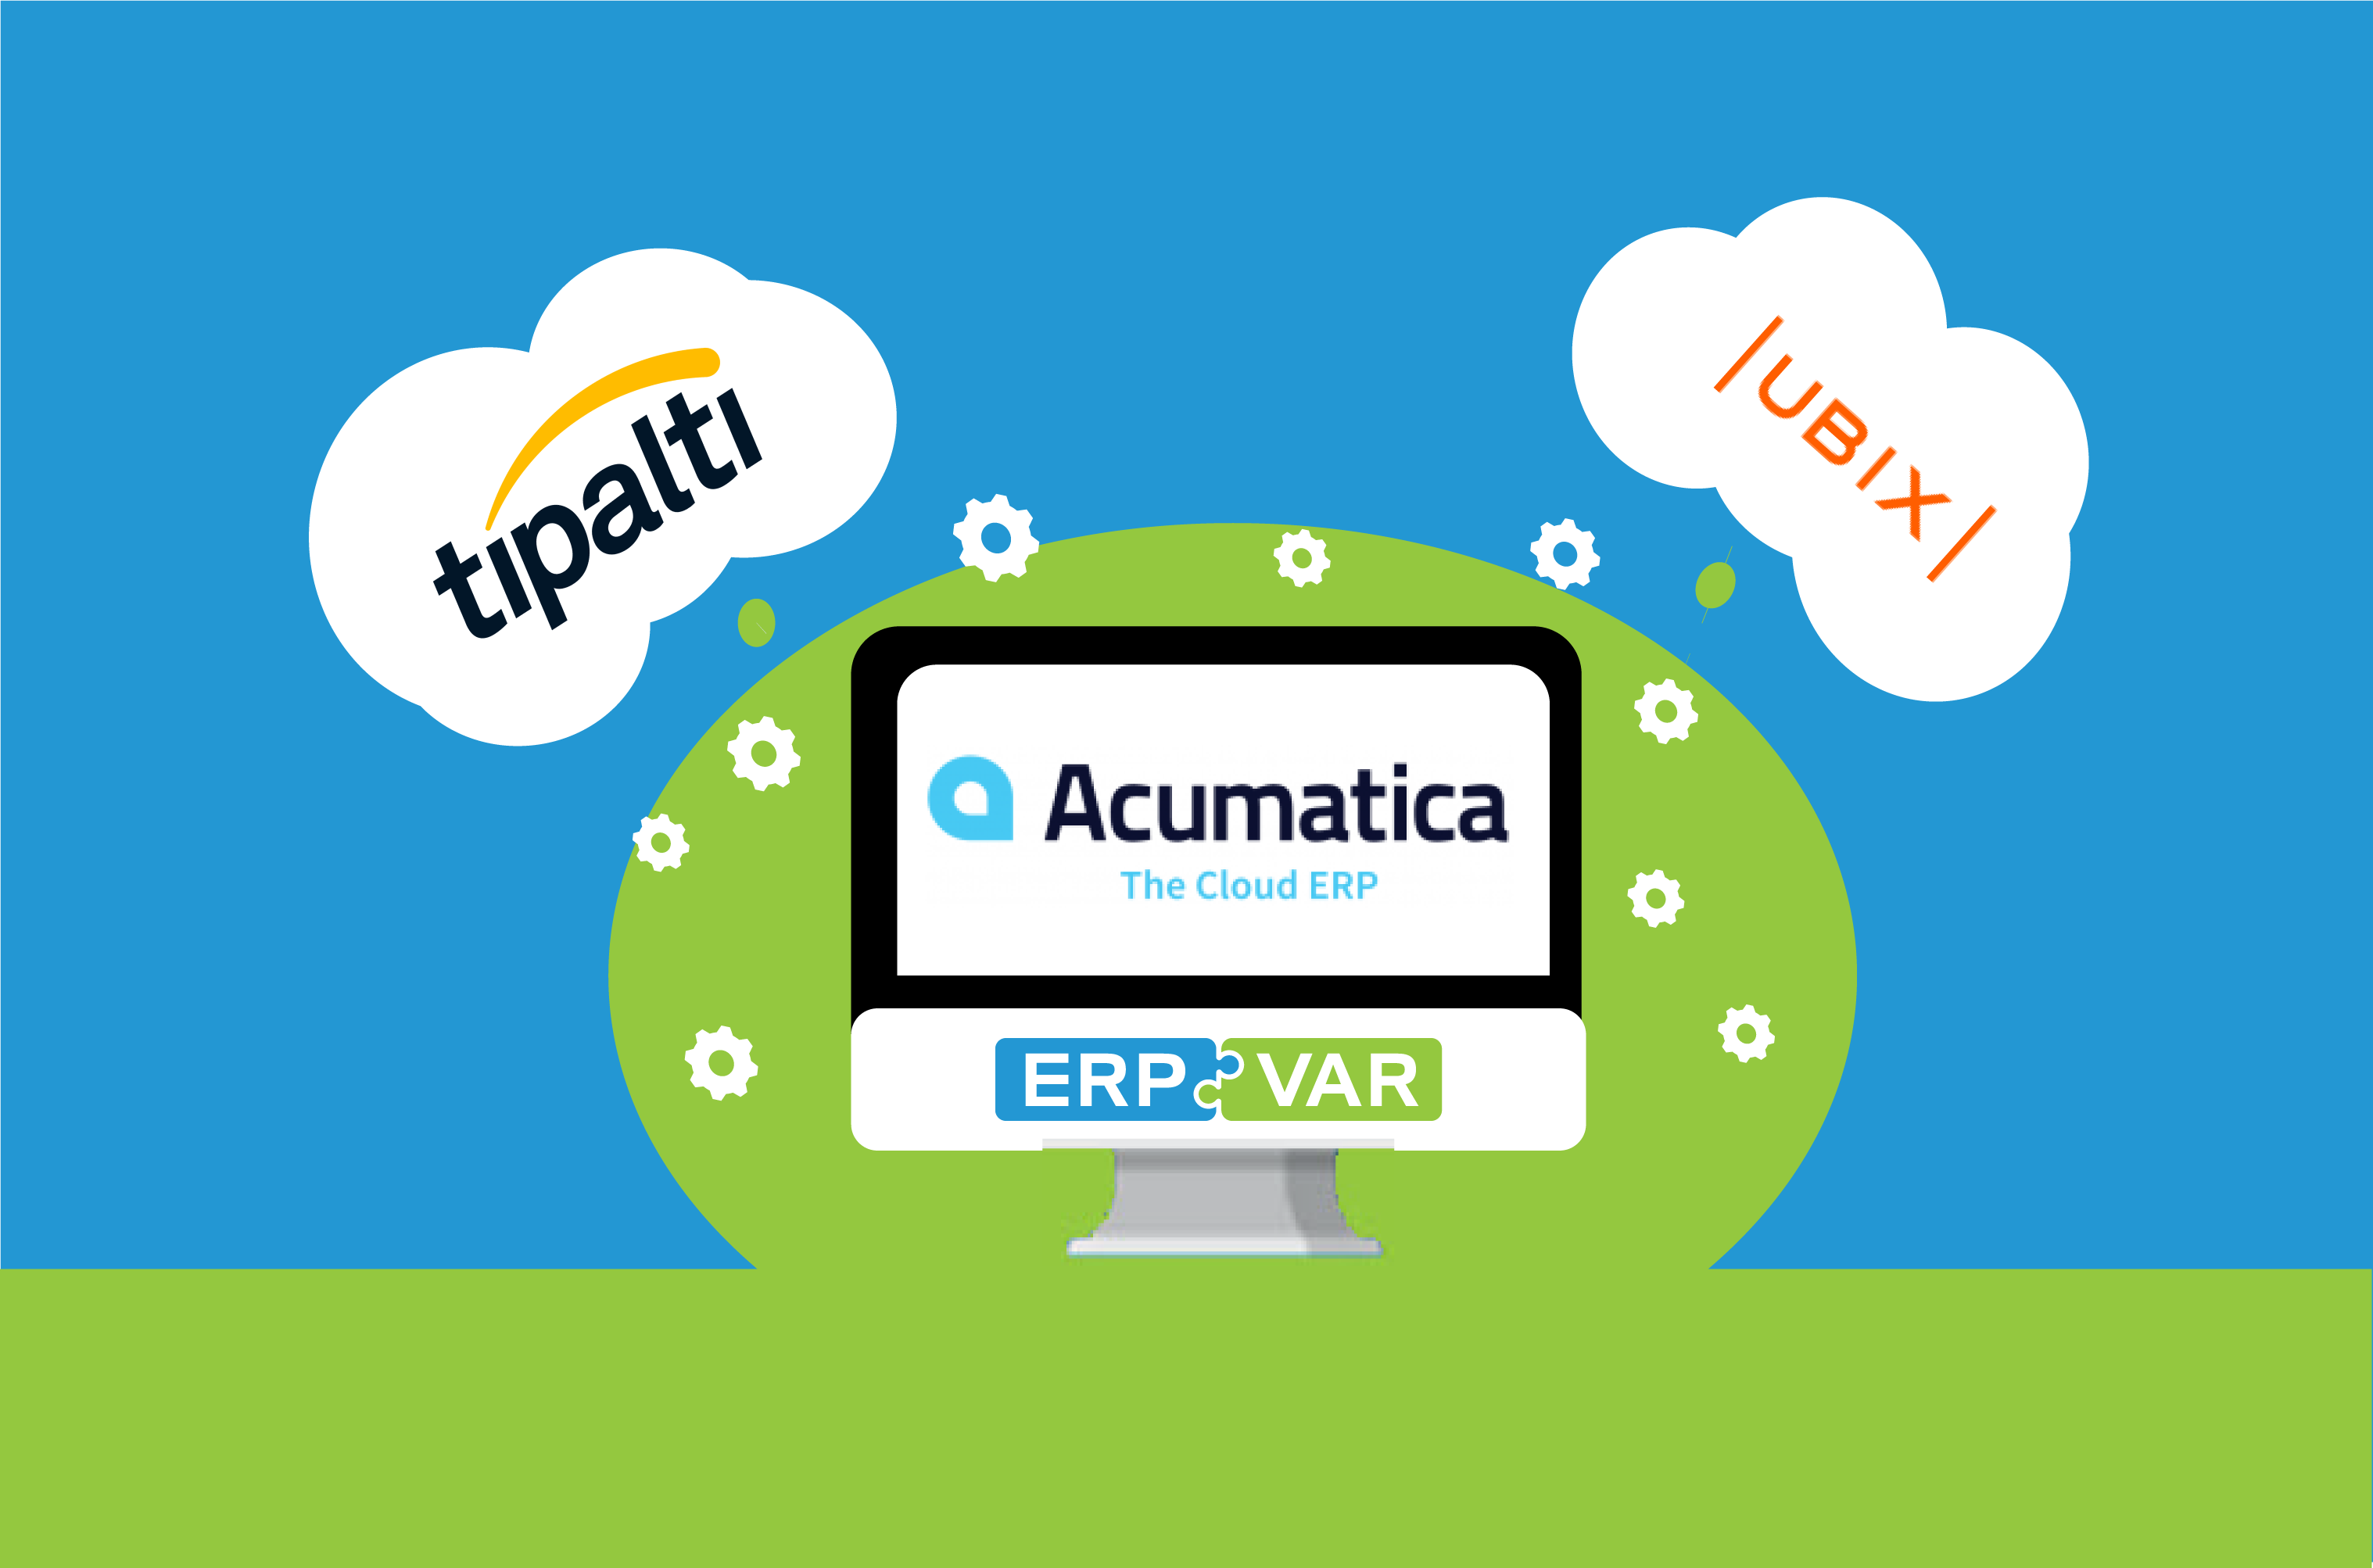 Acumatica Webinar with Tipalti Accounts Payable and UBIX Data Analytics